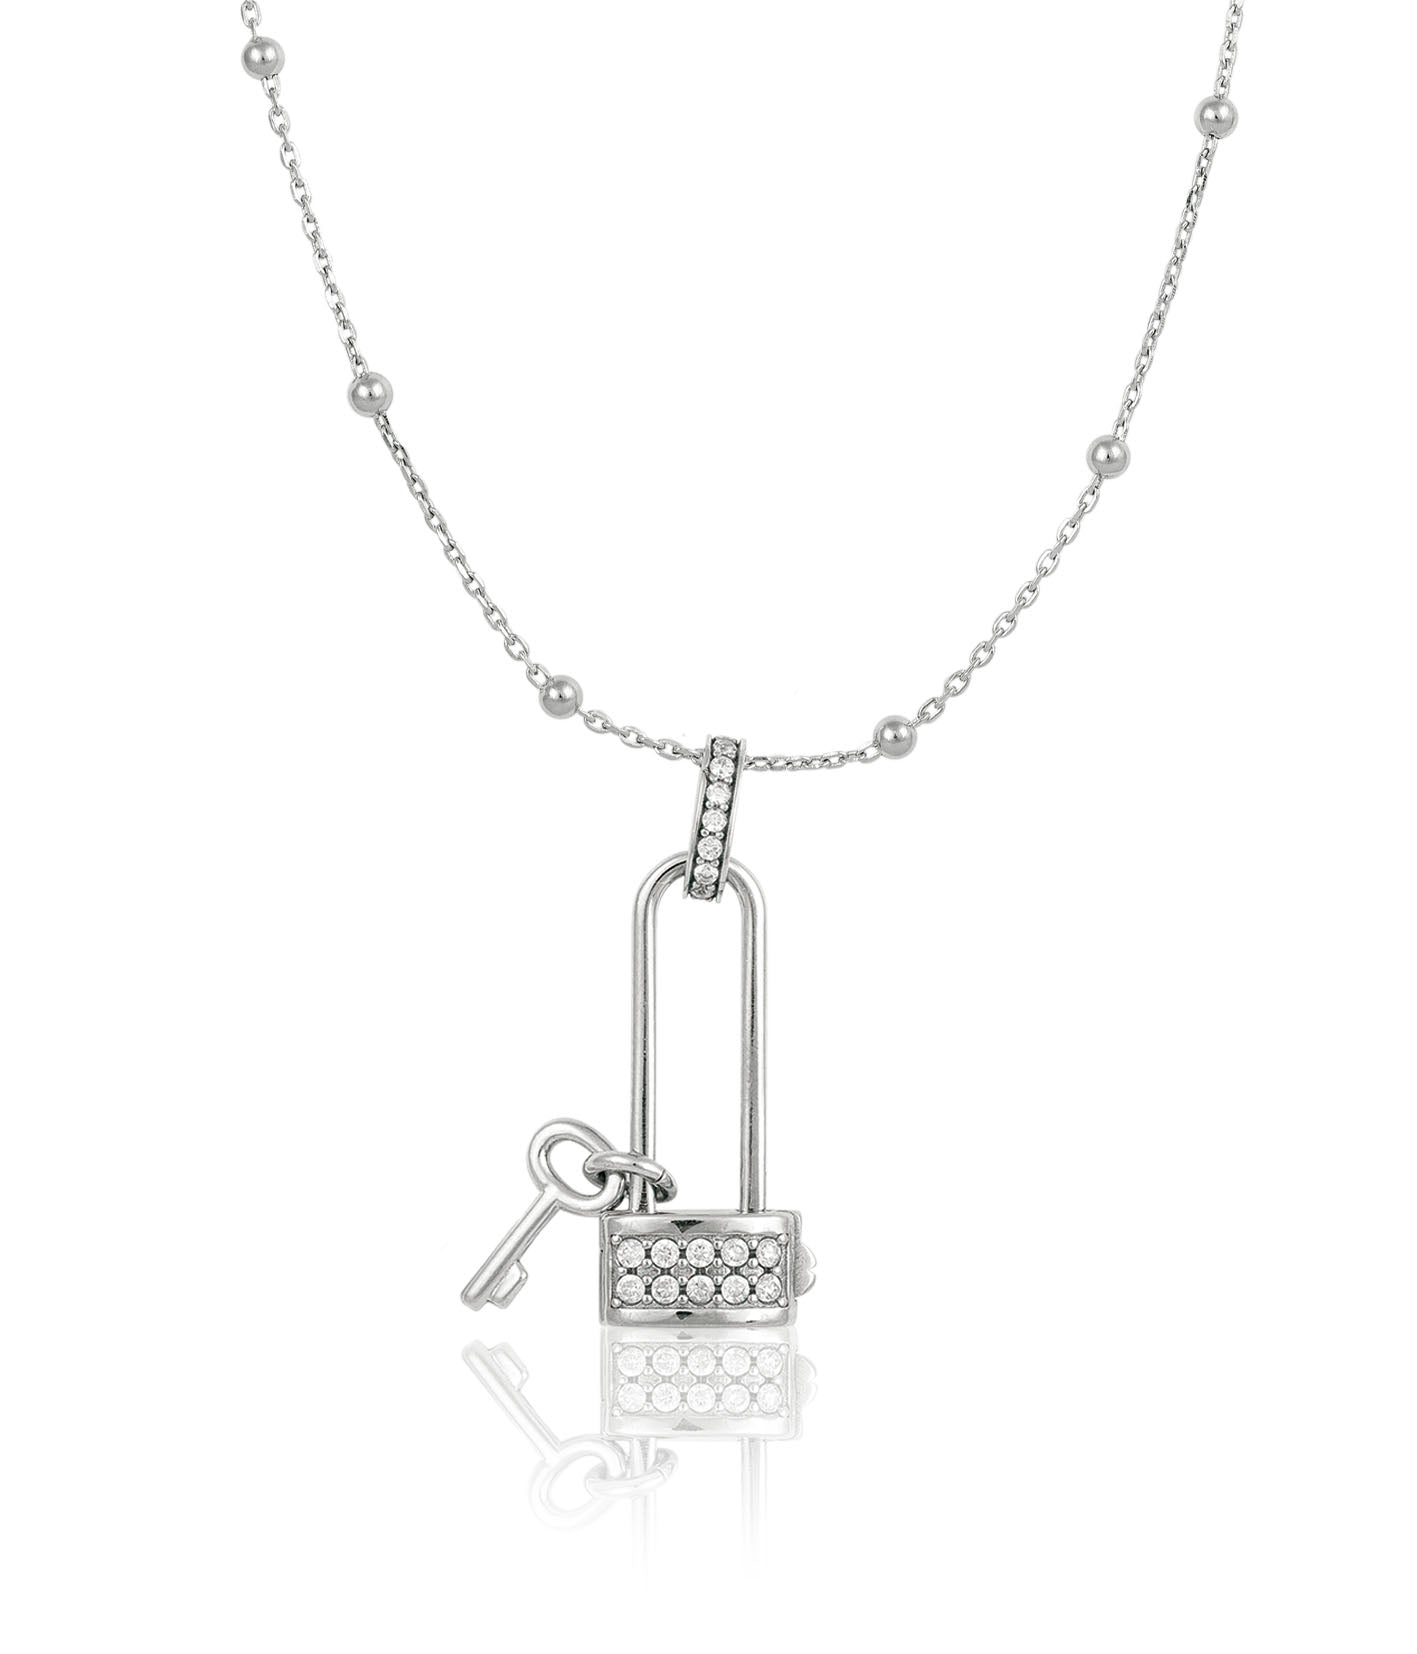 OSA - Keylove 9900 necklace